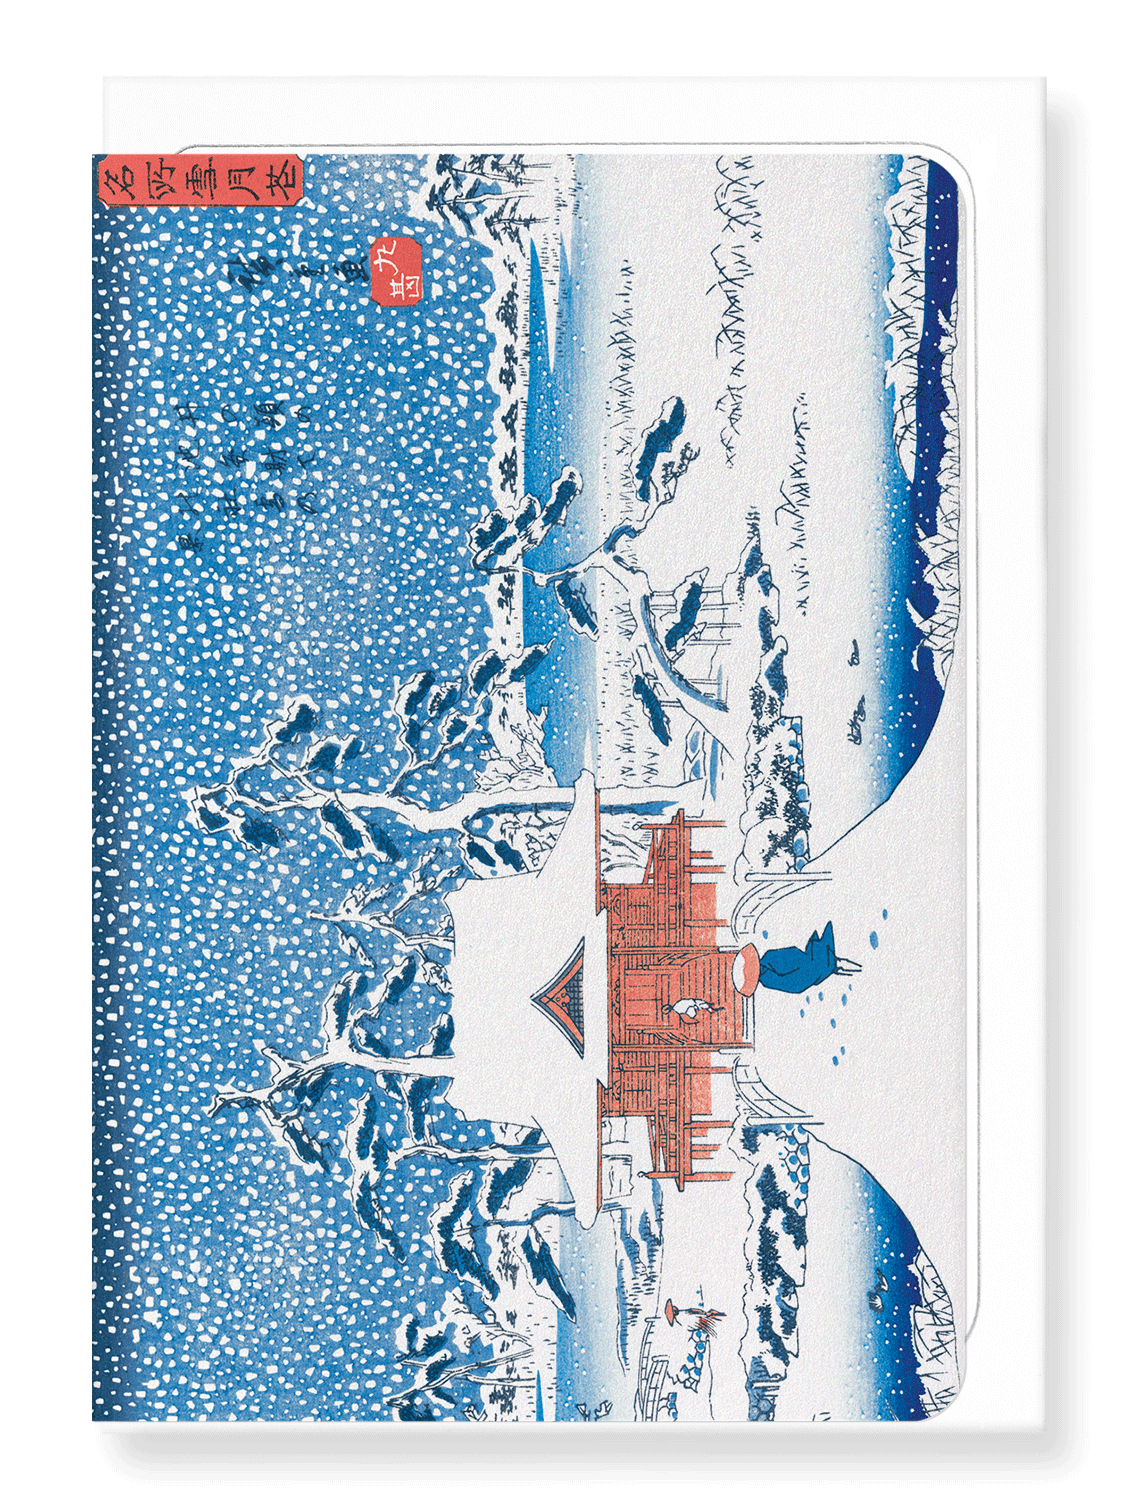 Ezen Designs - Snow scene at benzaiten shrine - Greeting Card - Front